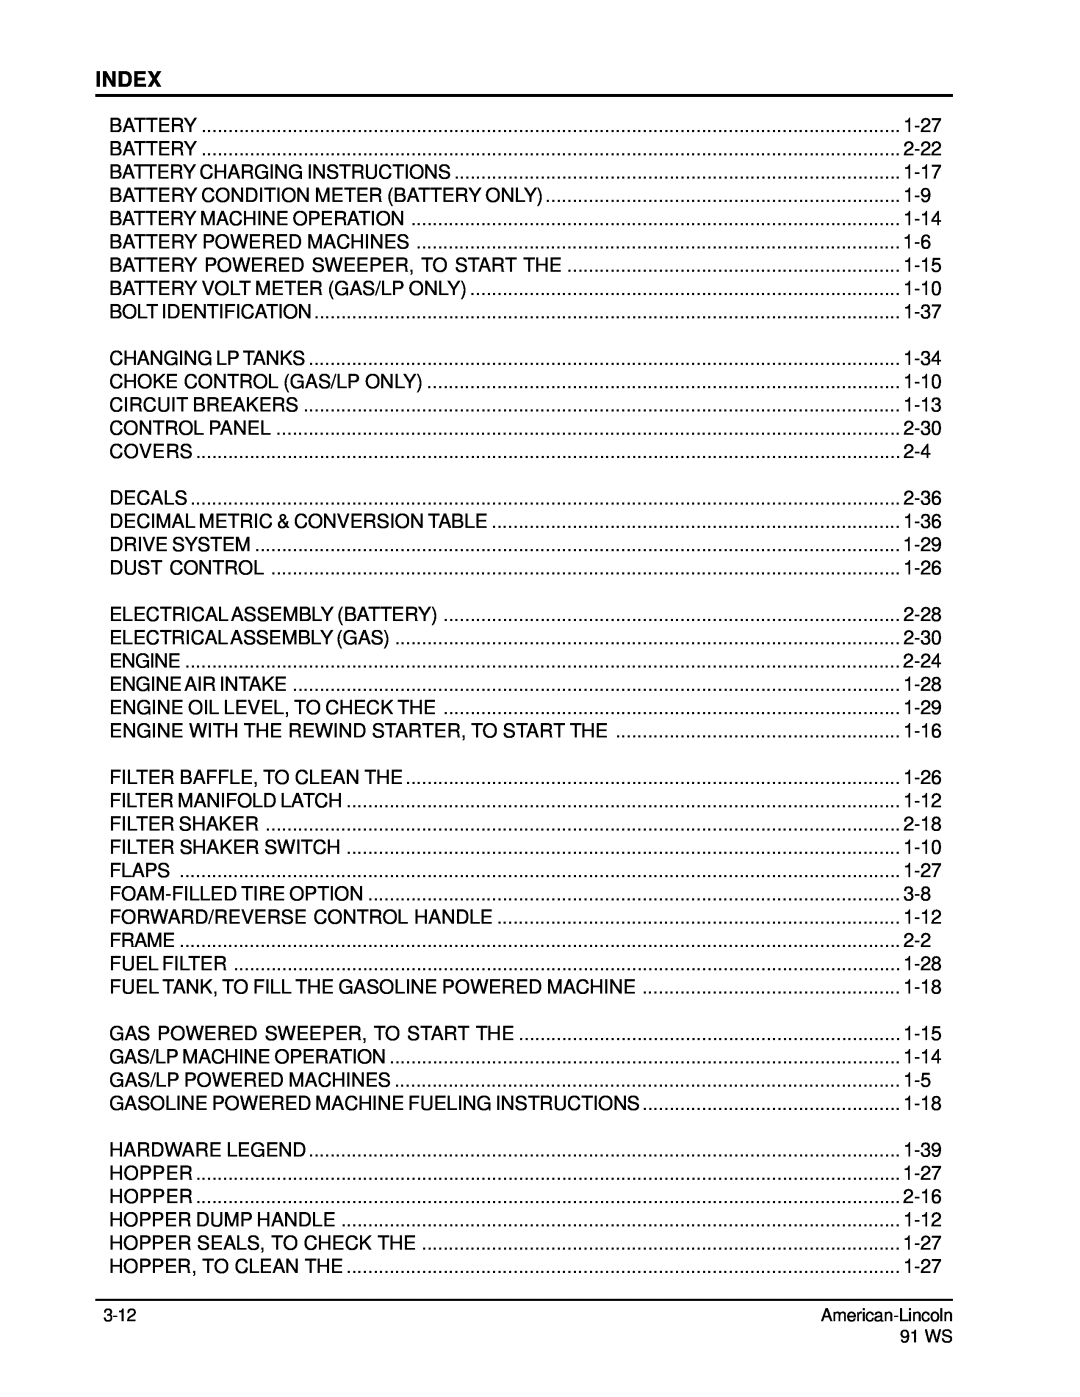 Nilfisk-ALTO 91WS manual Index 